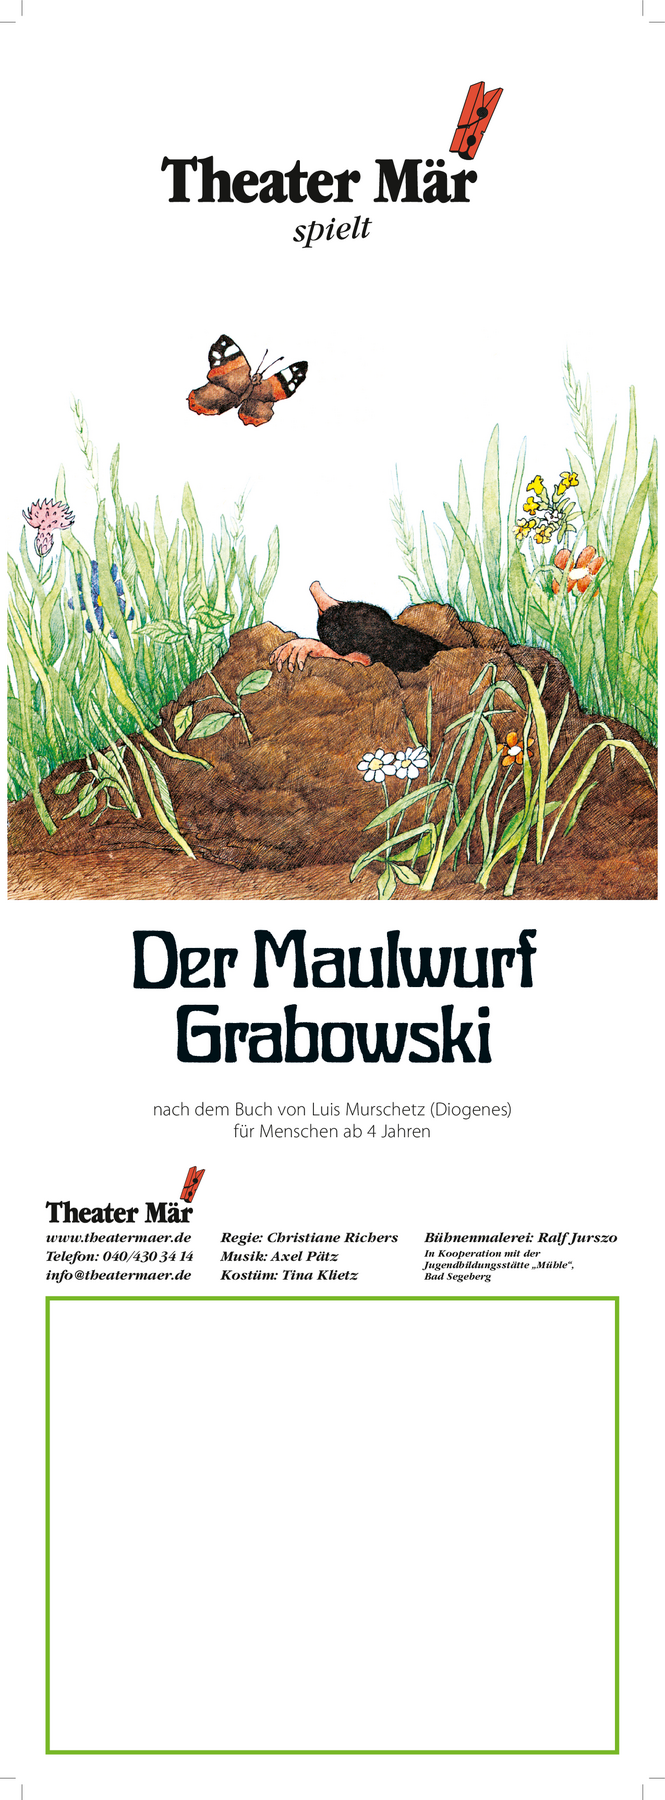 TheaterMär_Grabowski_Plakat_RZ Druckvorlage-001